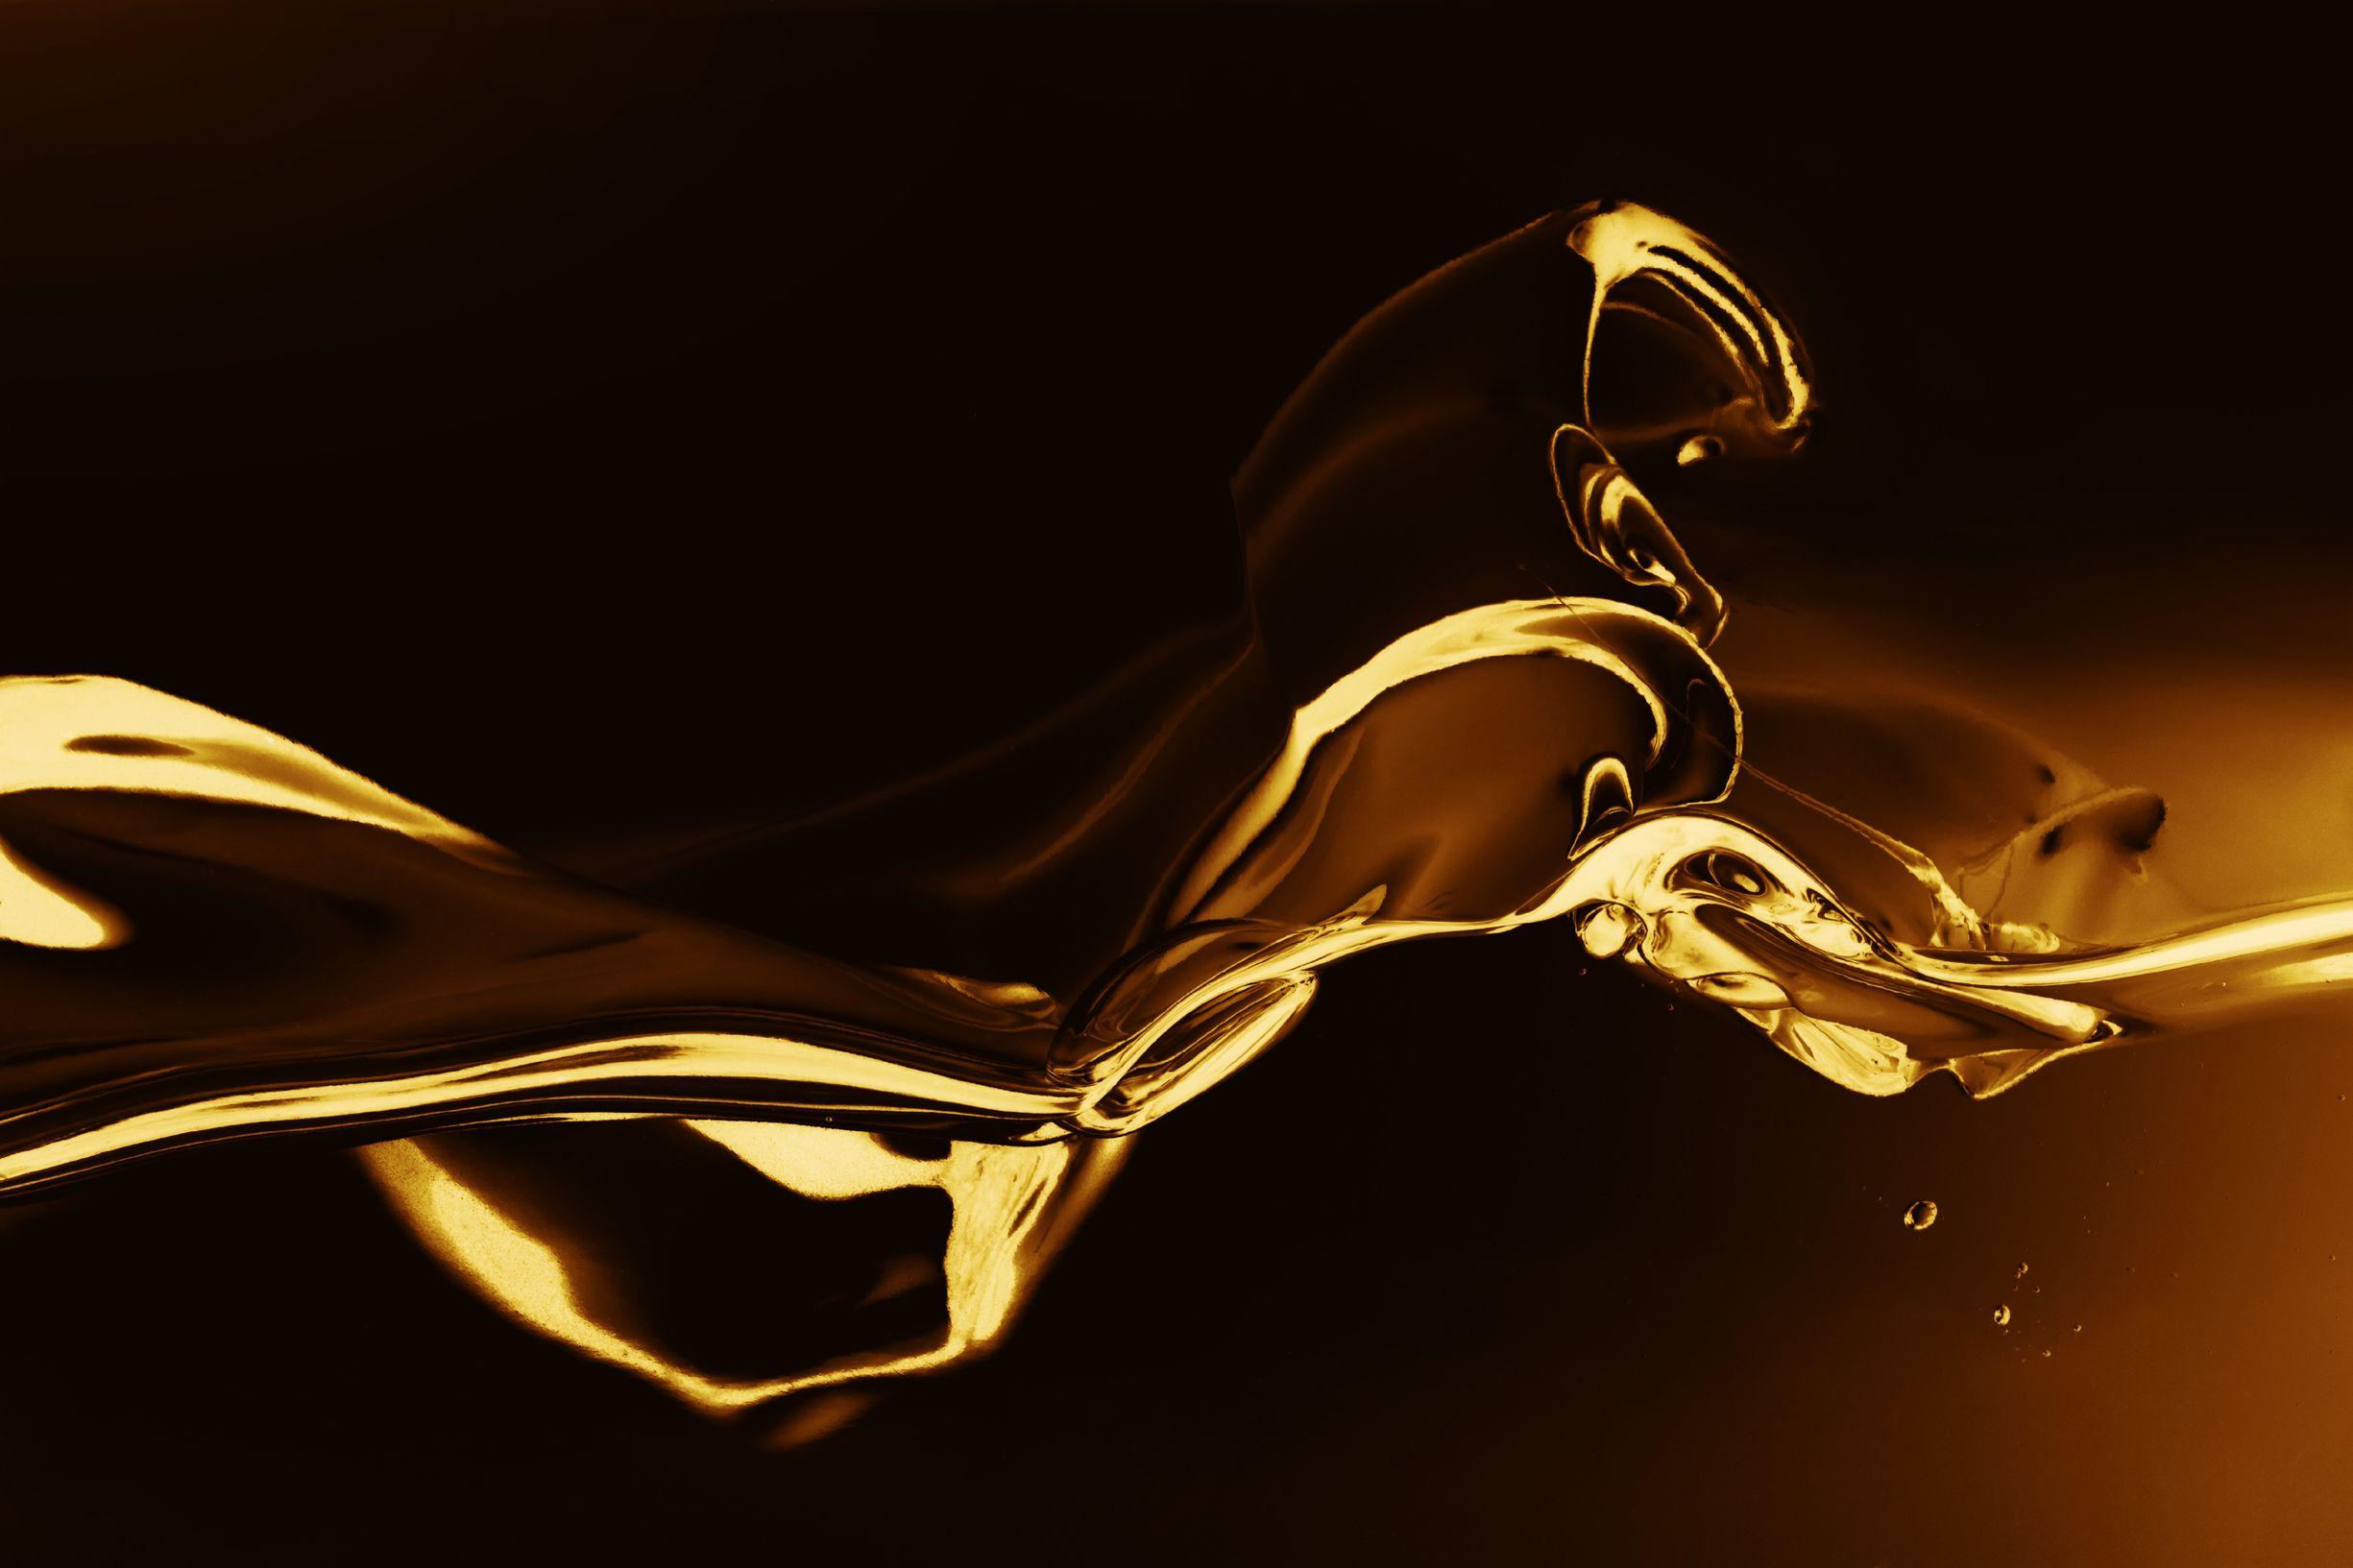 Hp Spectre Liquid Gold Wallpapers Top Free Hp Spectre Liquid Gold Backgrounds Wallpaperaccess